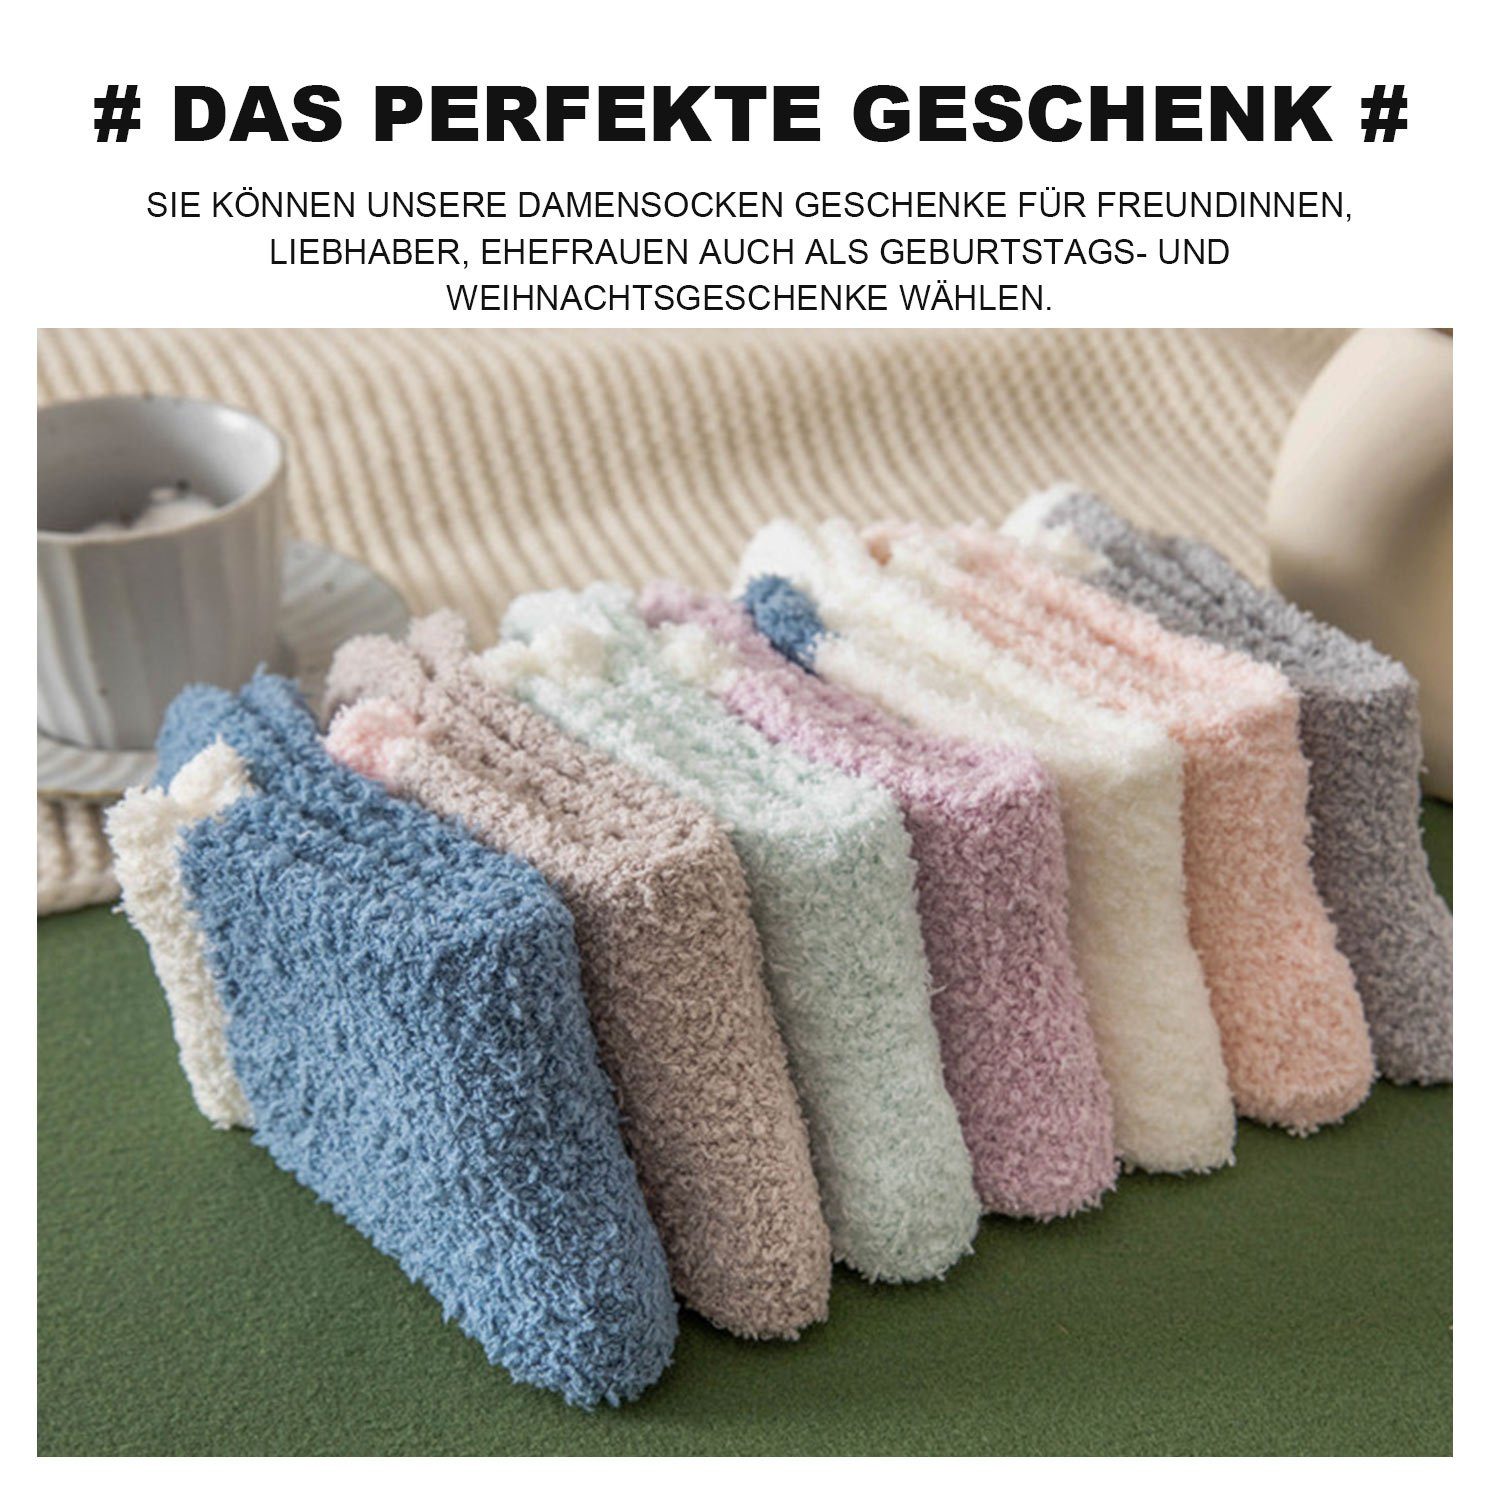 MAGICSHE Langsocken 2 Paare für hellblau Fleece warme weiche flauschige und Socken Winter Socken Rutschfeste